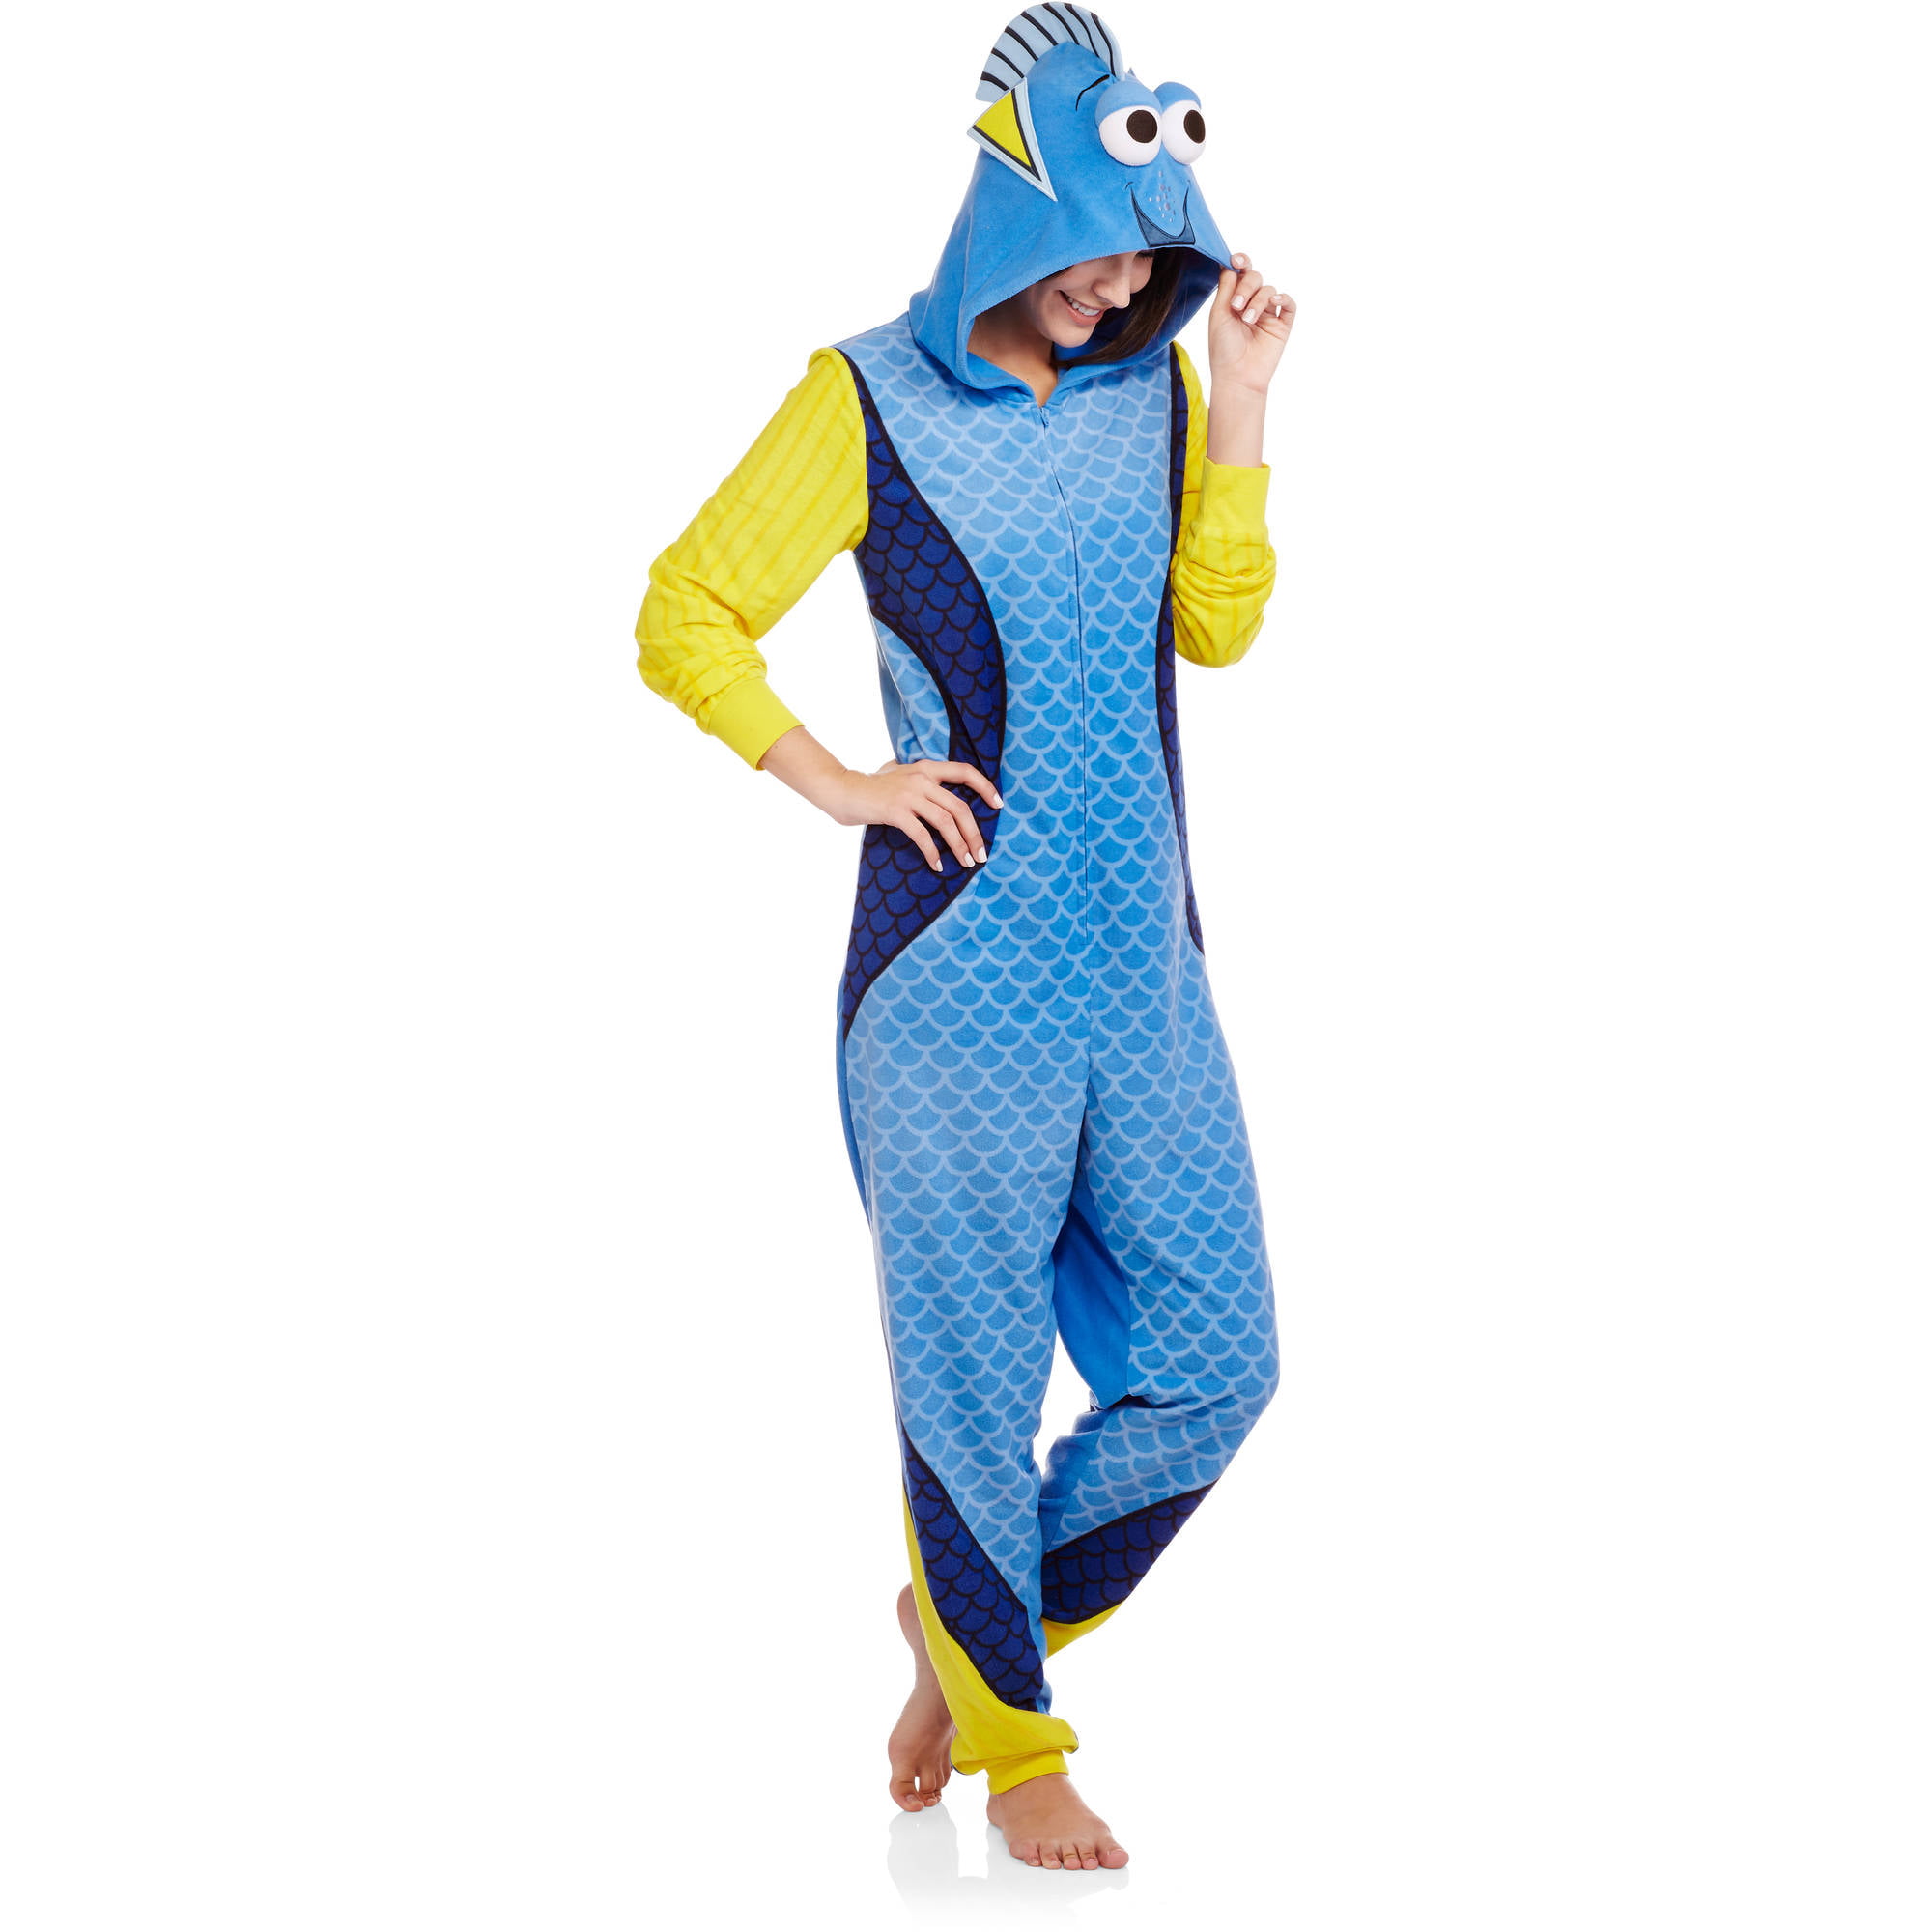 Disney Finding Dory Women's and Women's Plus License Sleepwear Adult Onesie Costume Union Suit Pajama (XS-3X)